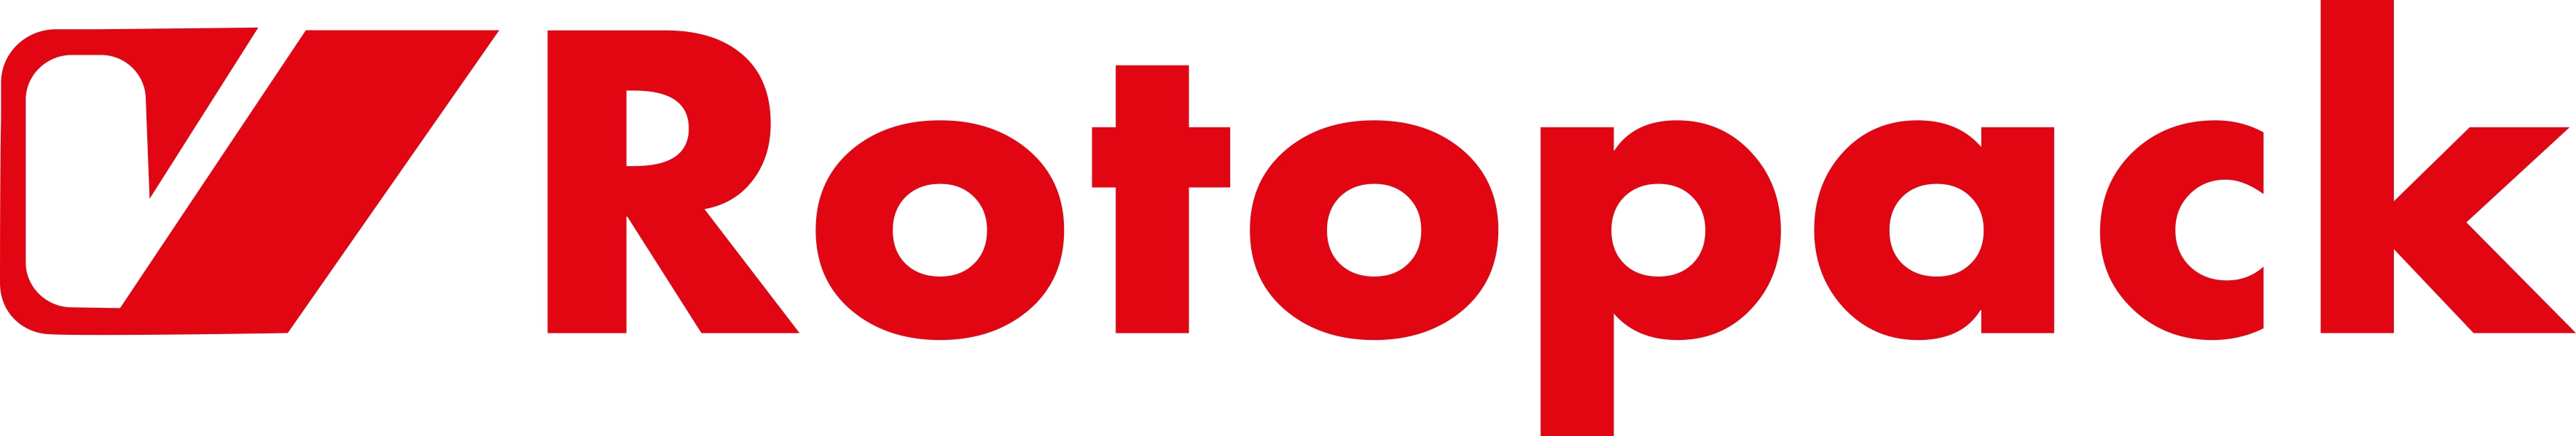 Rotopack logo 1